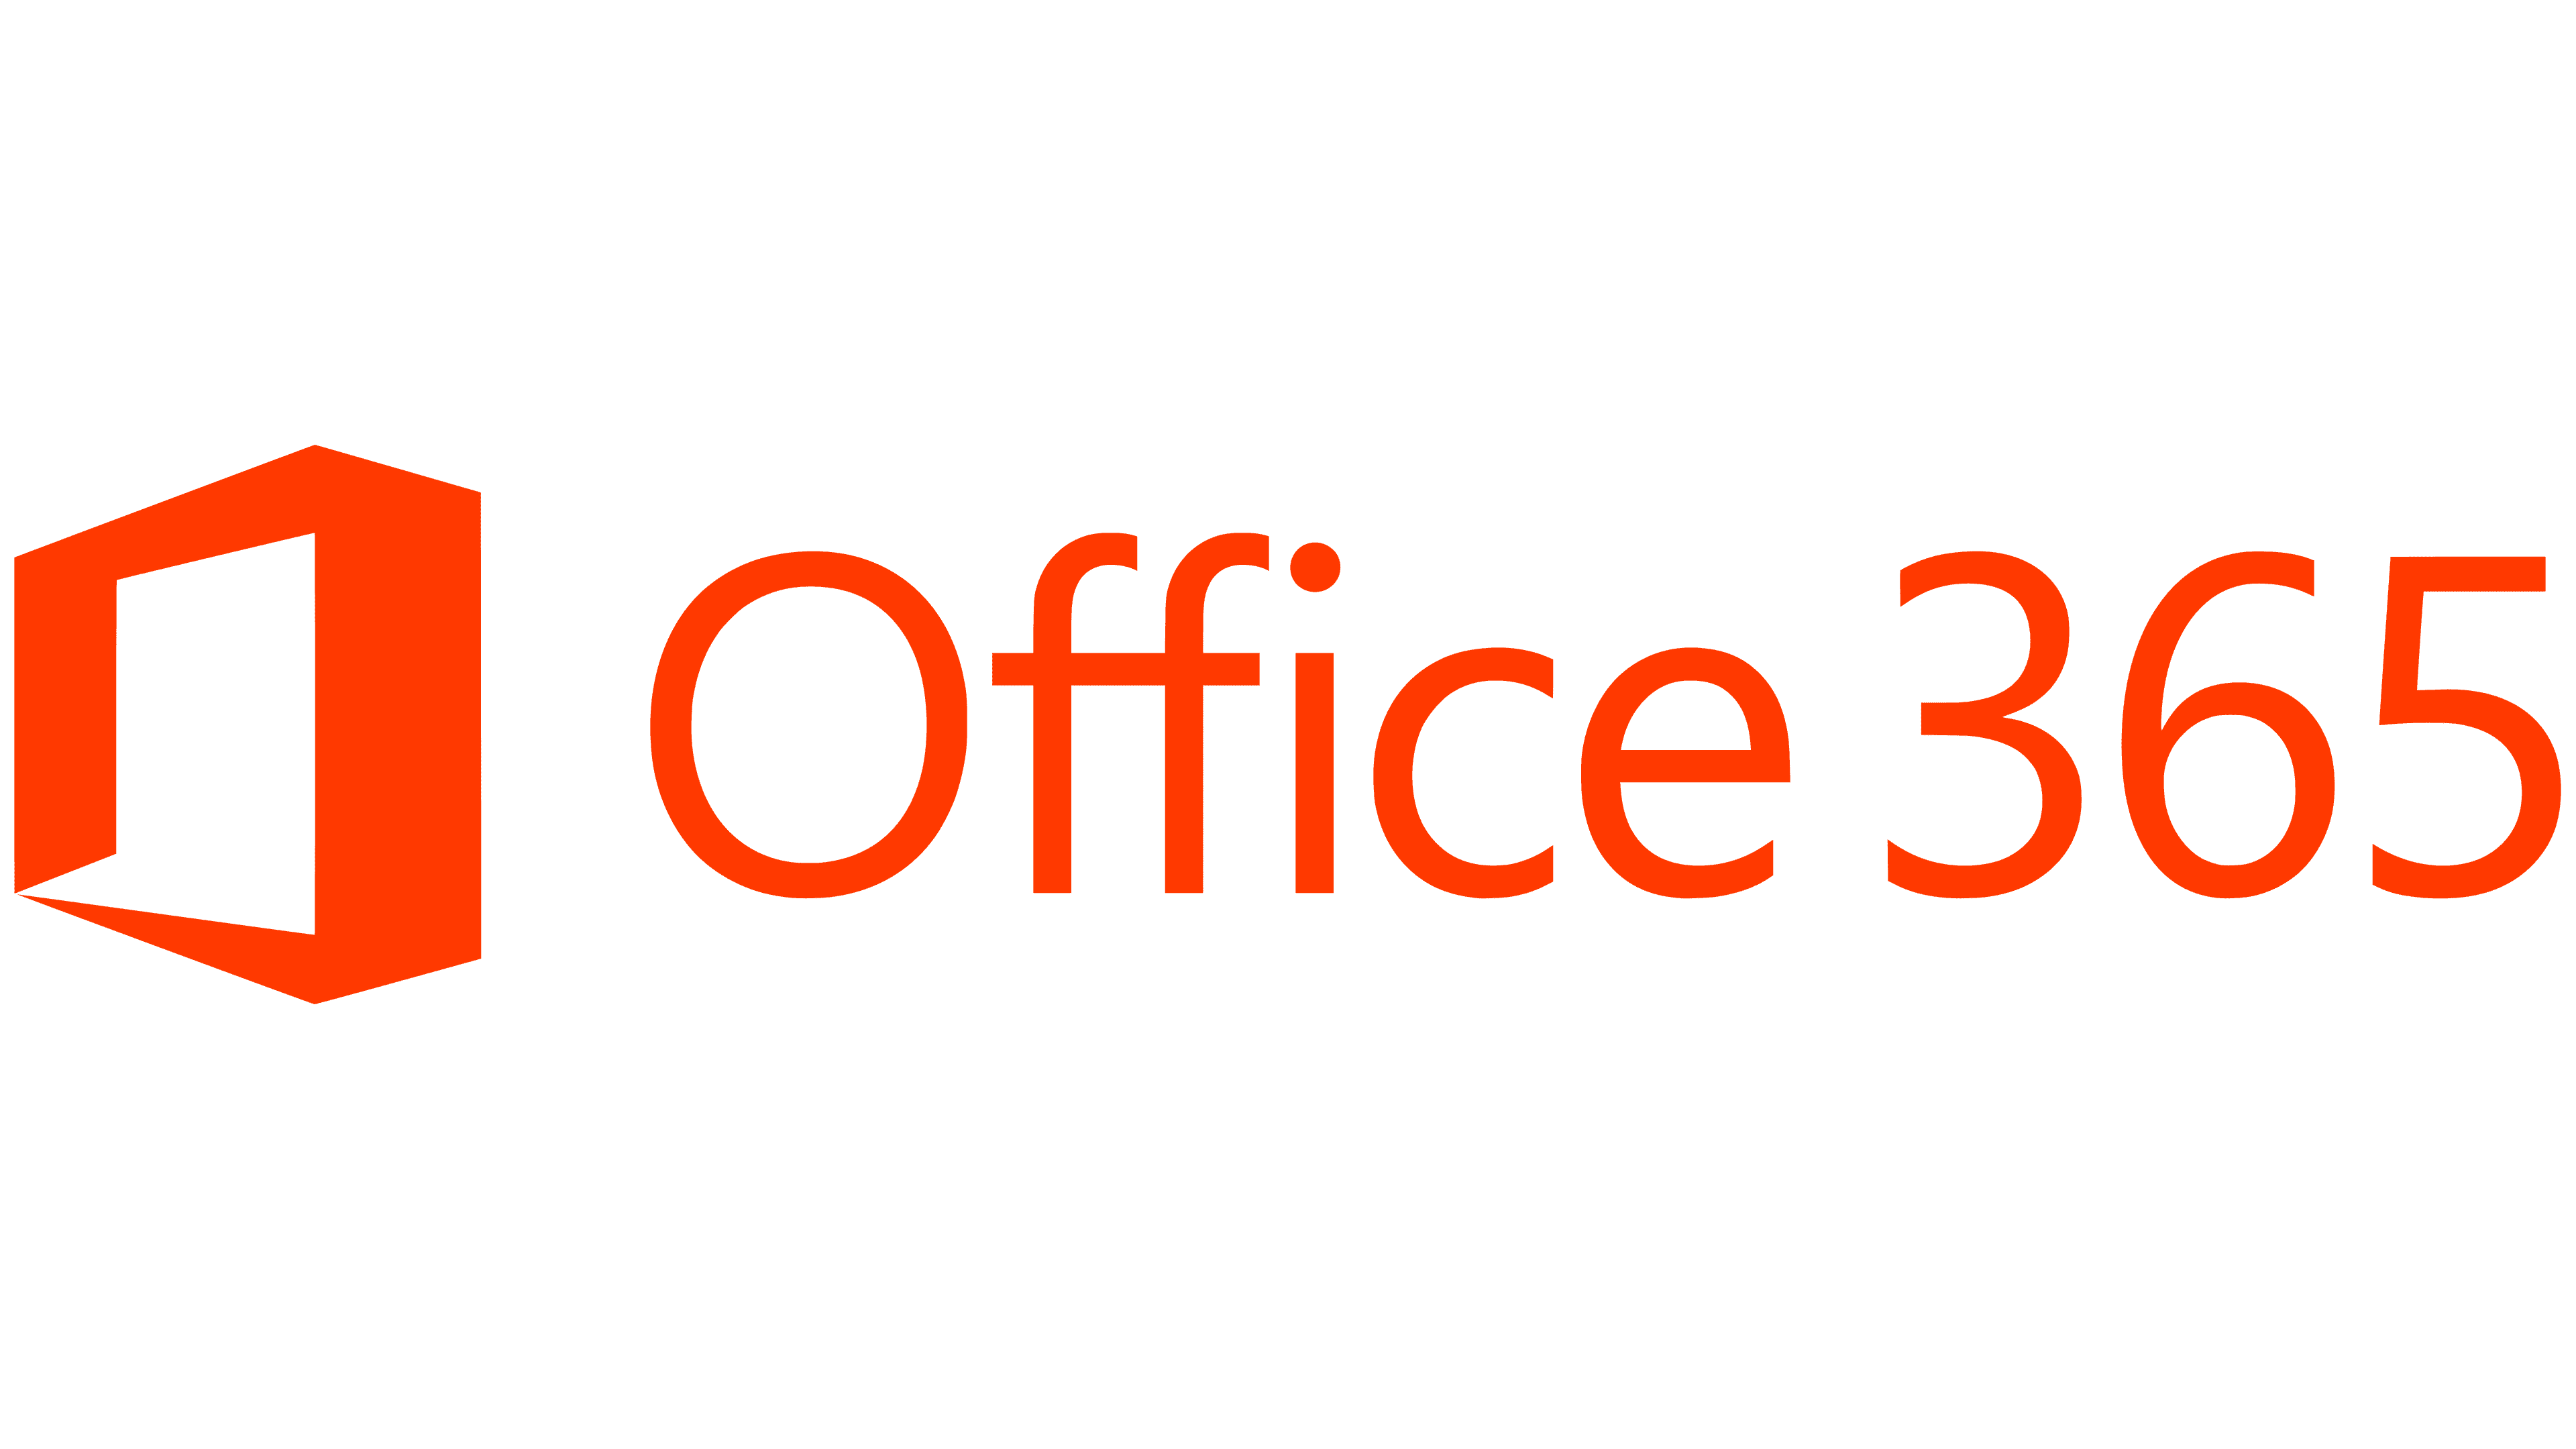 Office-365-Logo-1